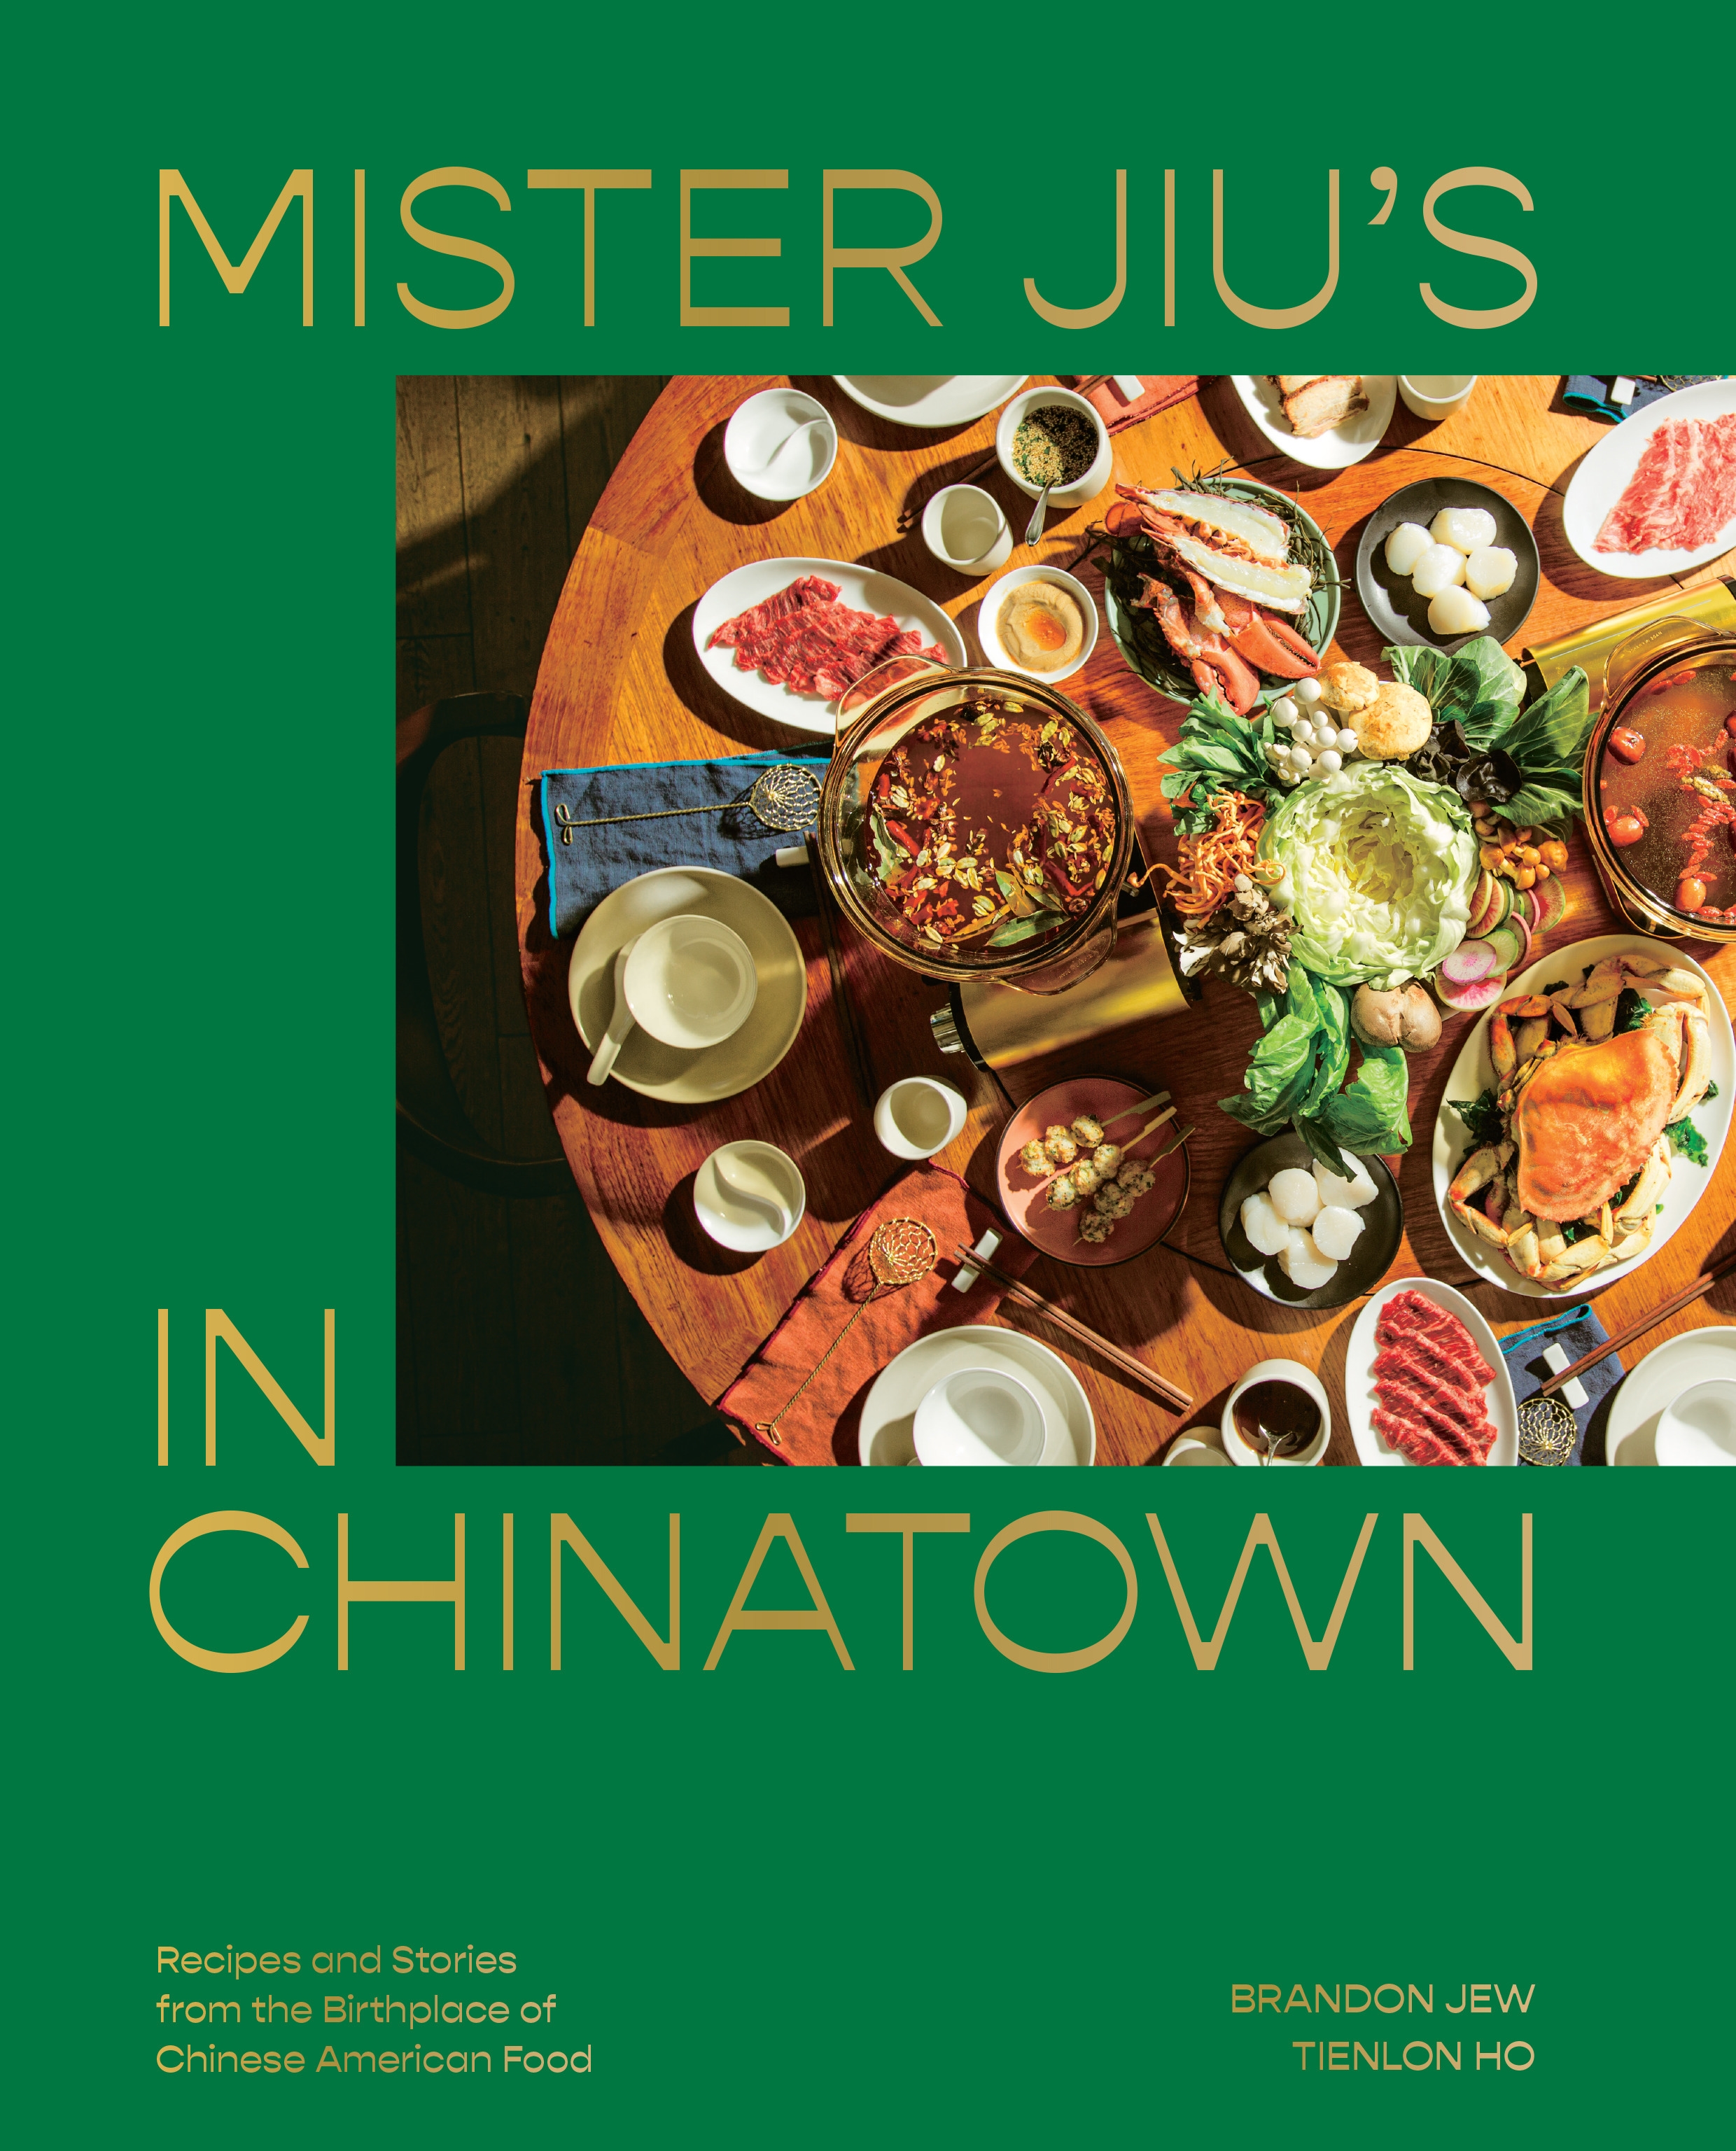 Mister Jiu’s in Chinatown by Brandon Jew, Tienlon Ho